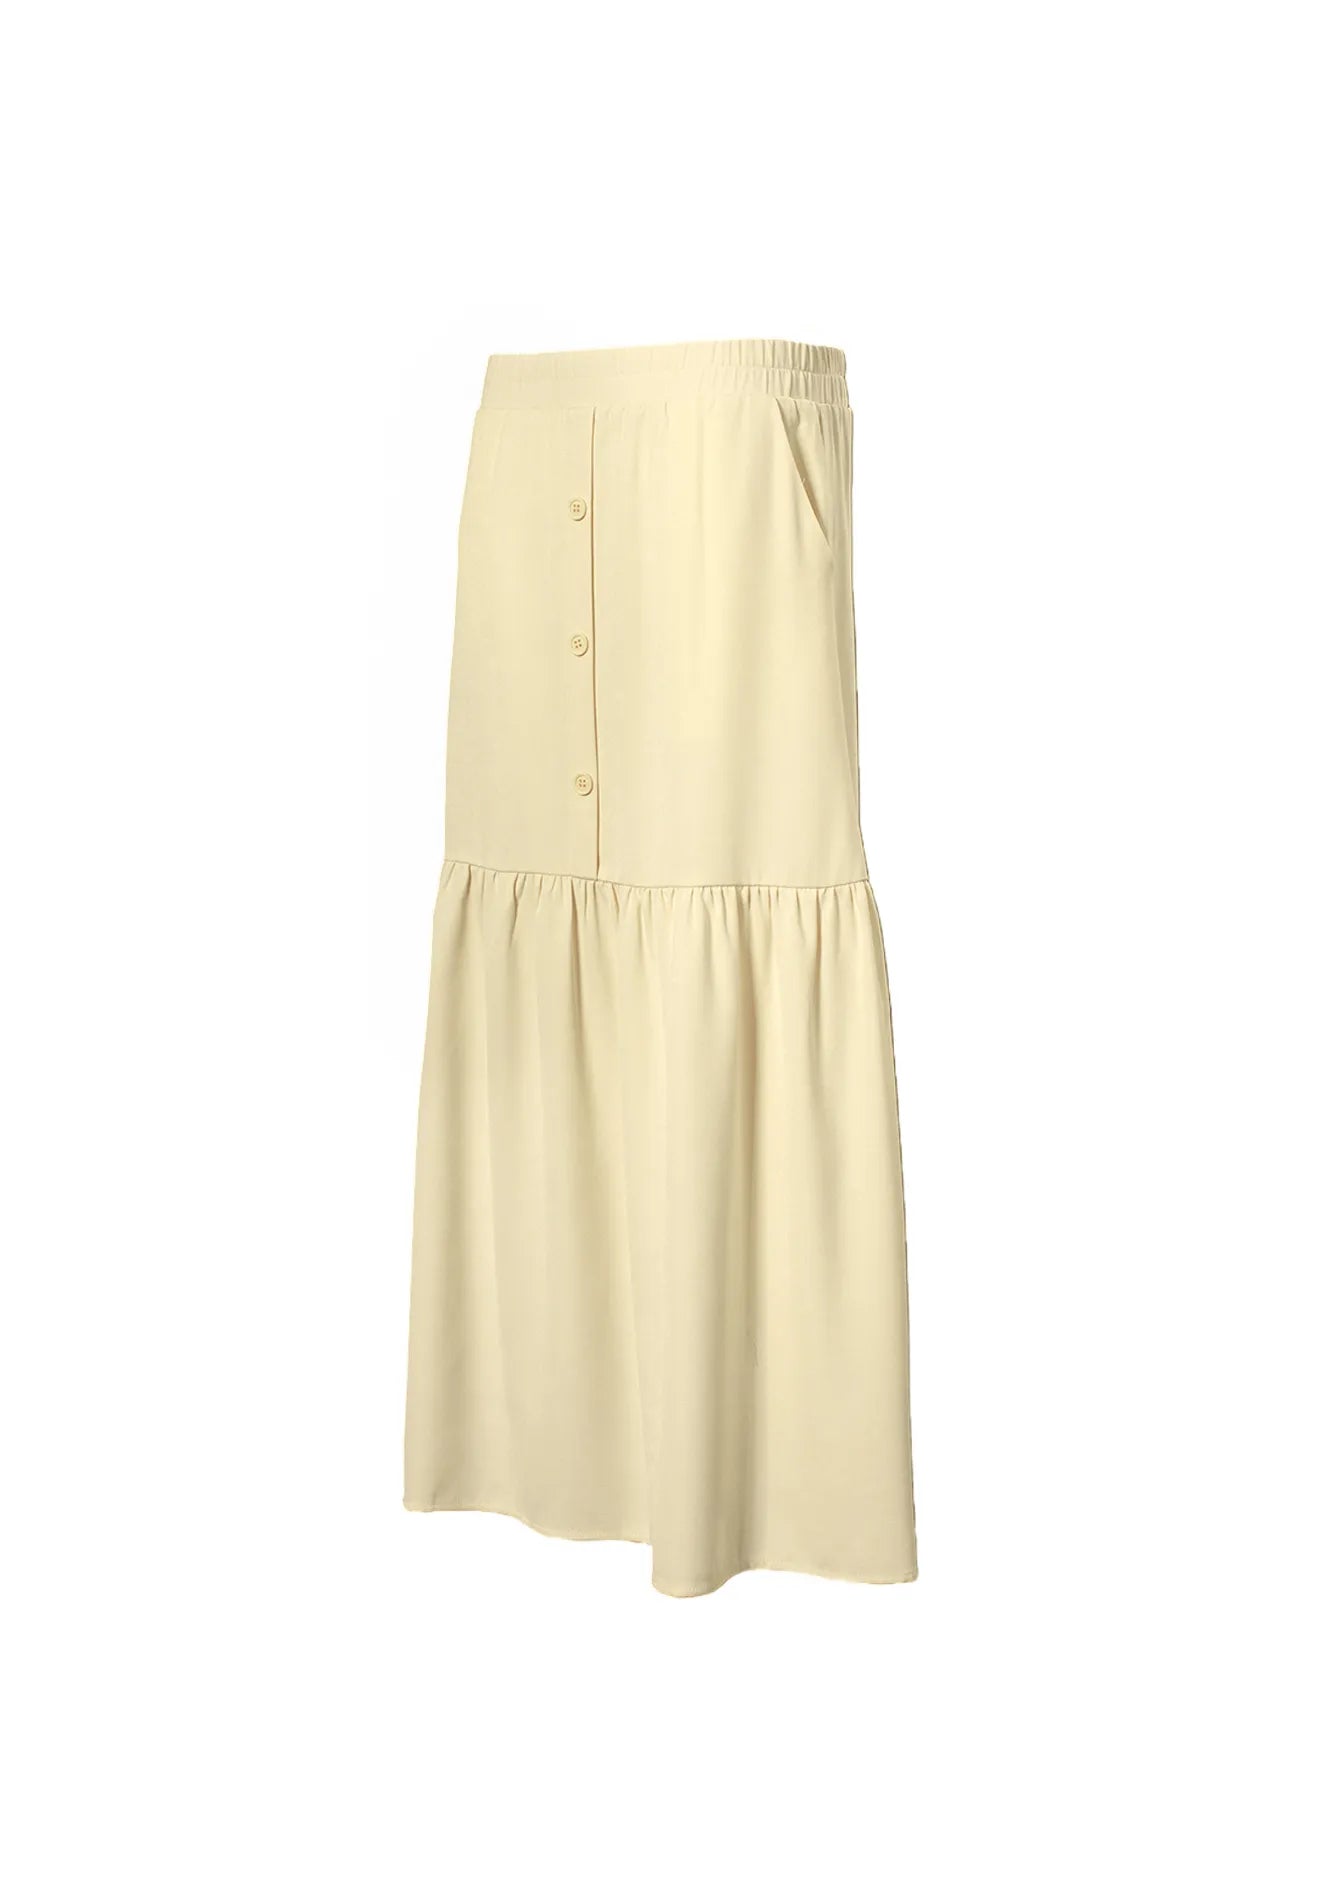 DAISY By VOIR Pocketed Front Button Peplum Maxi Skirt